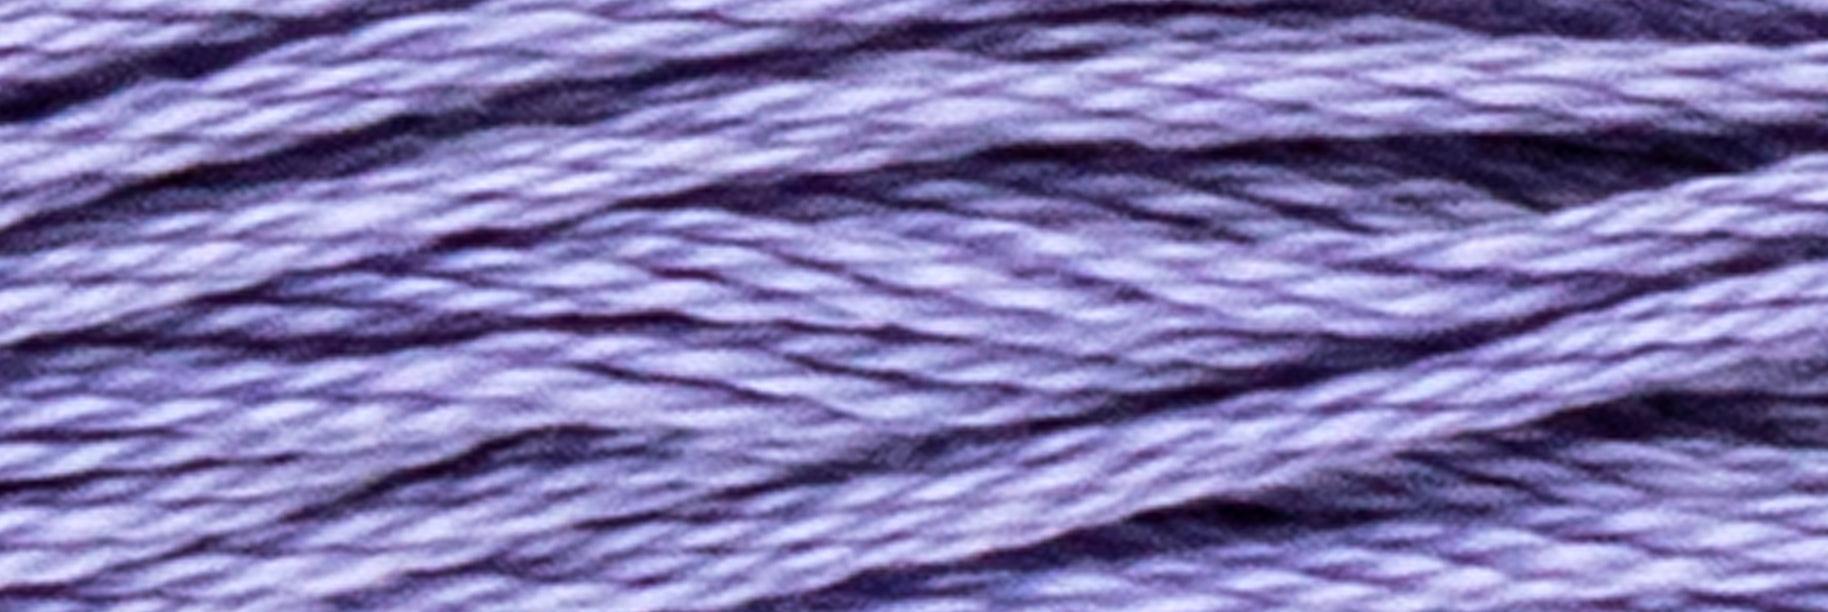 Stranded Cotton Luca-S - 133 / DMC 30 / Anchor X - Luca-S Stranded Cotton